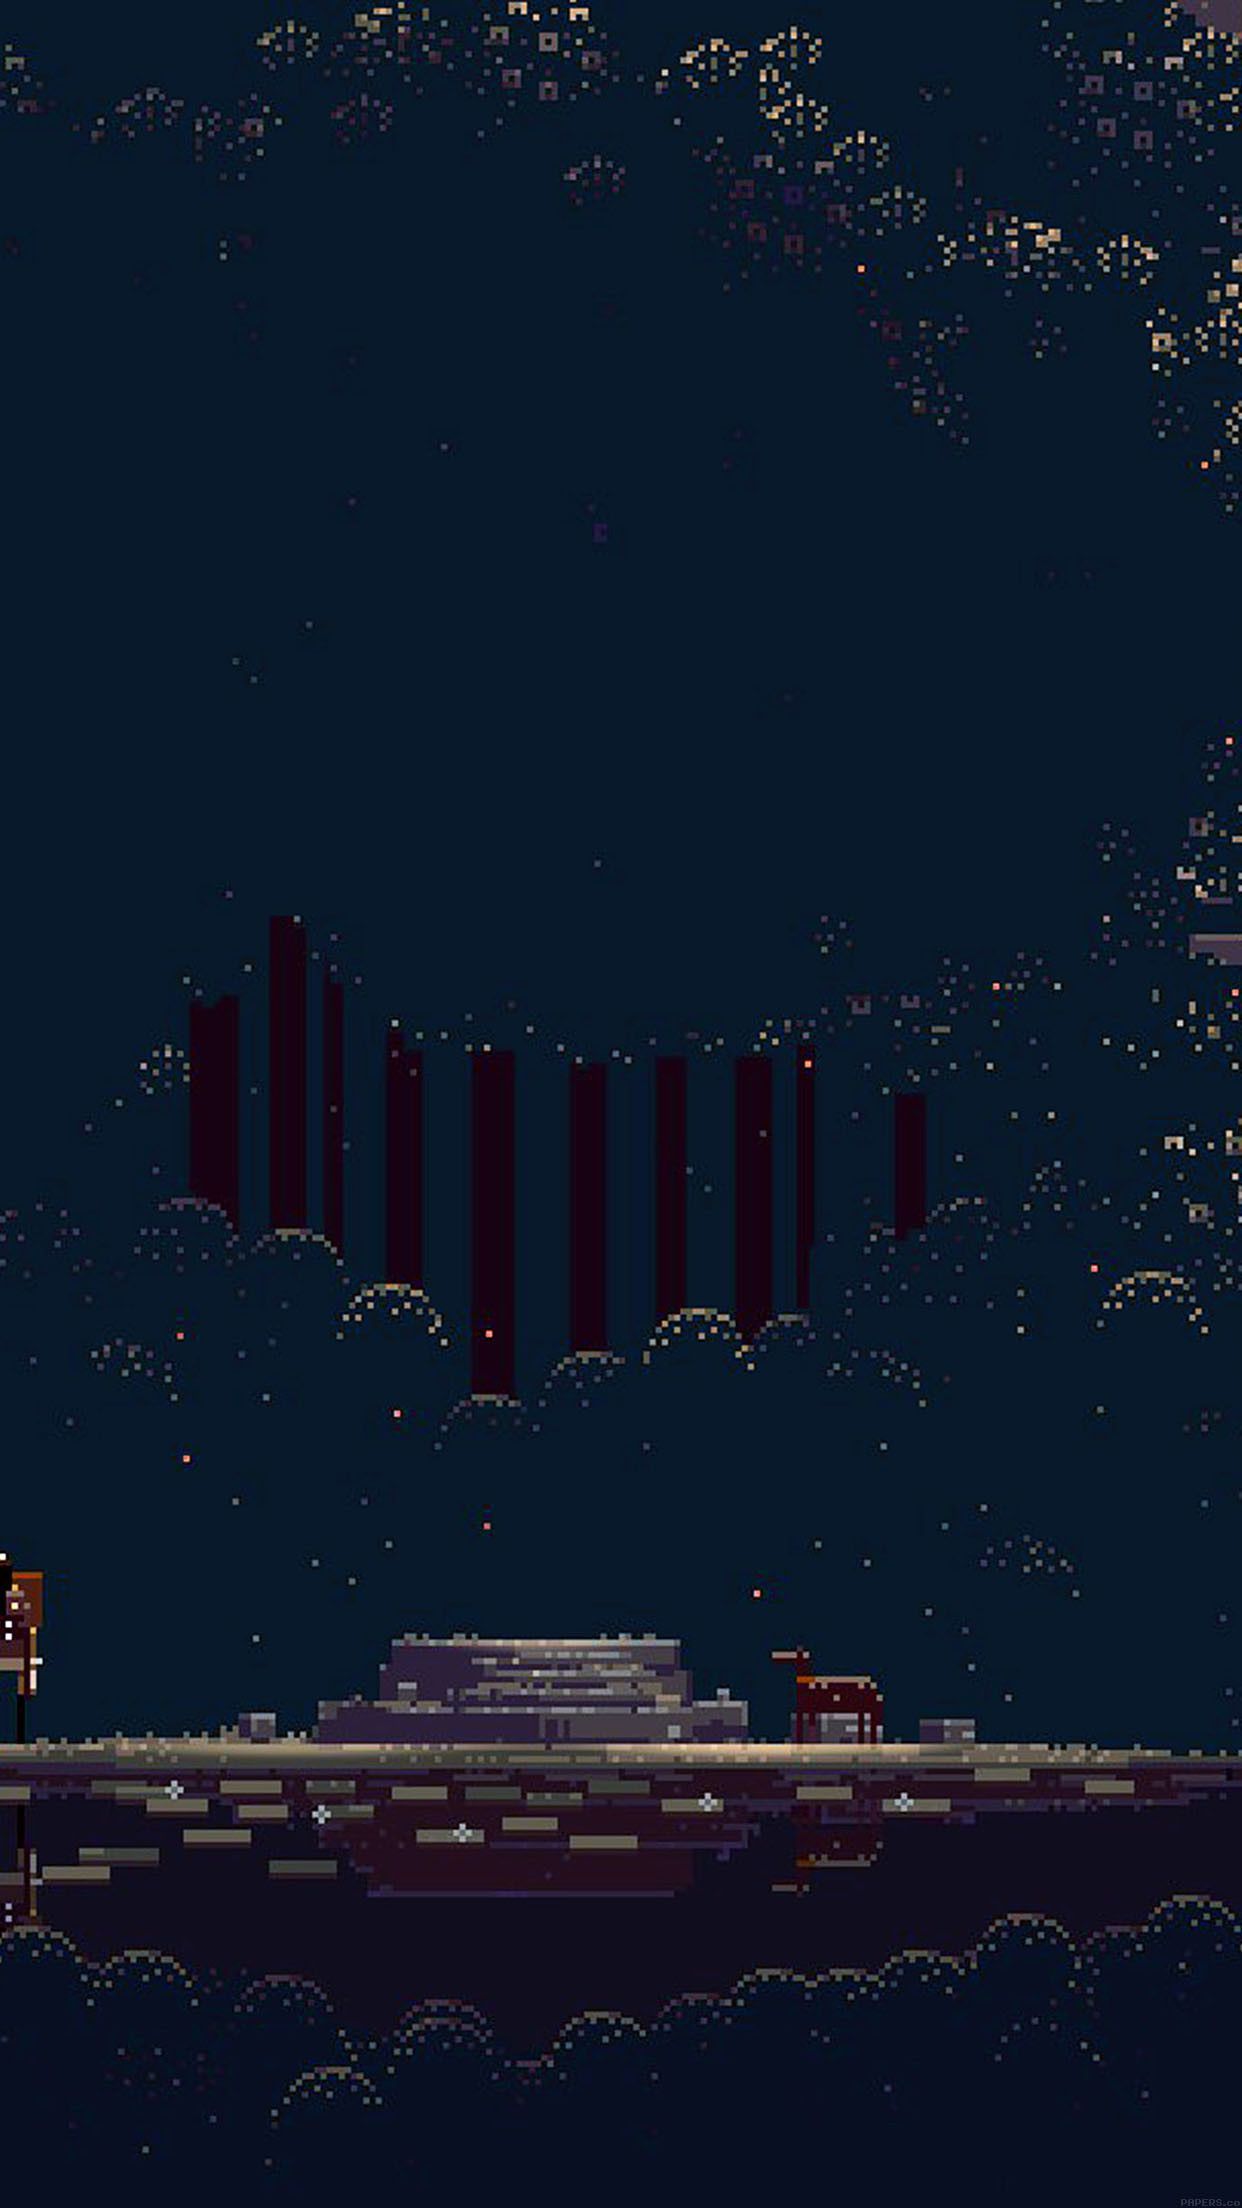 A pixel art wallpaper of a ship in the night sky - Nintendo